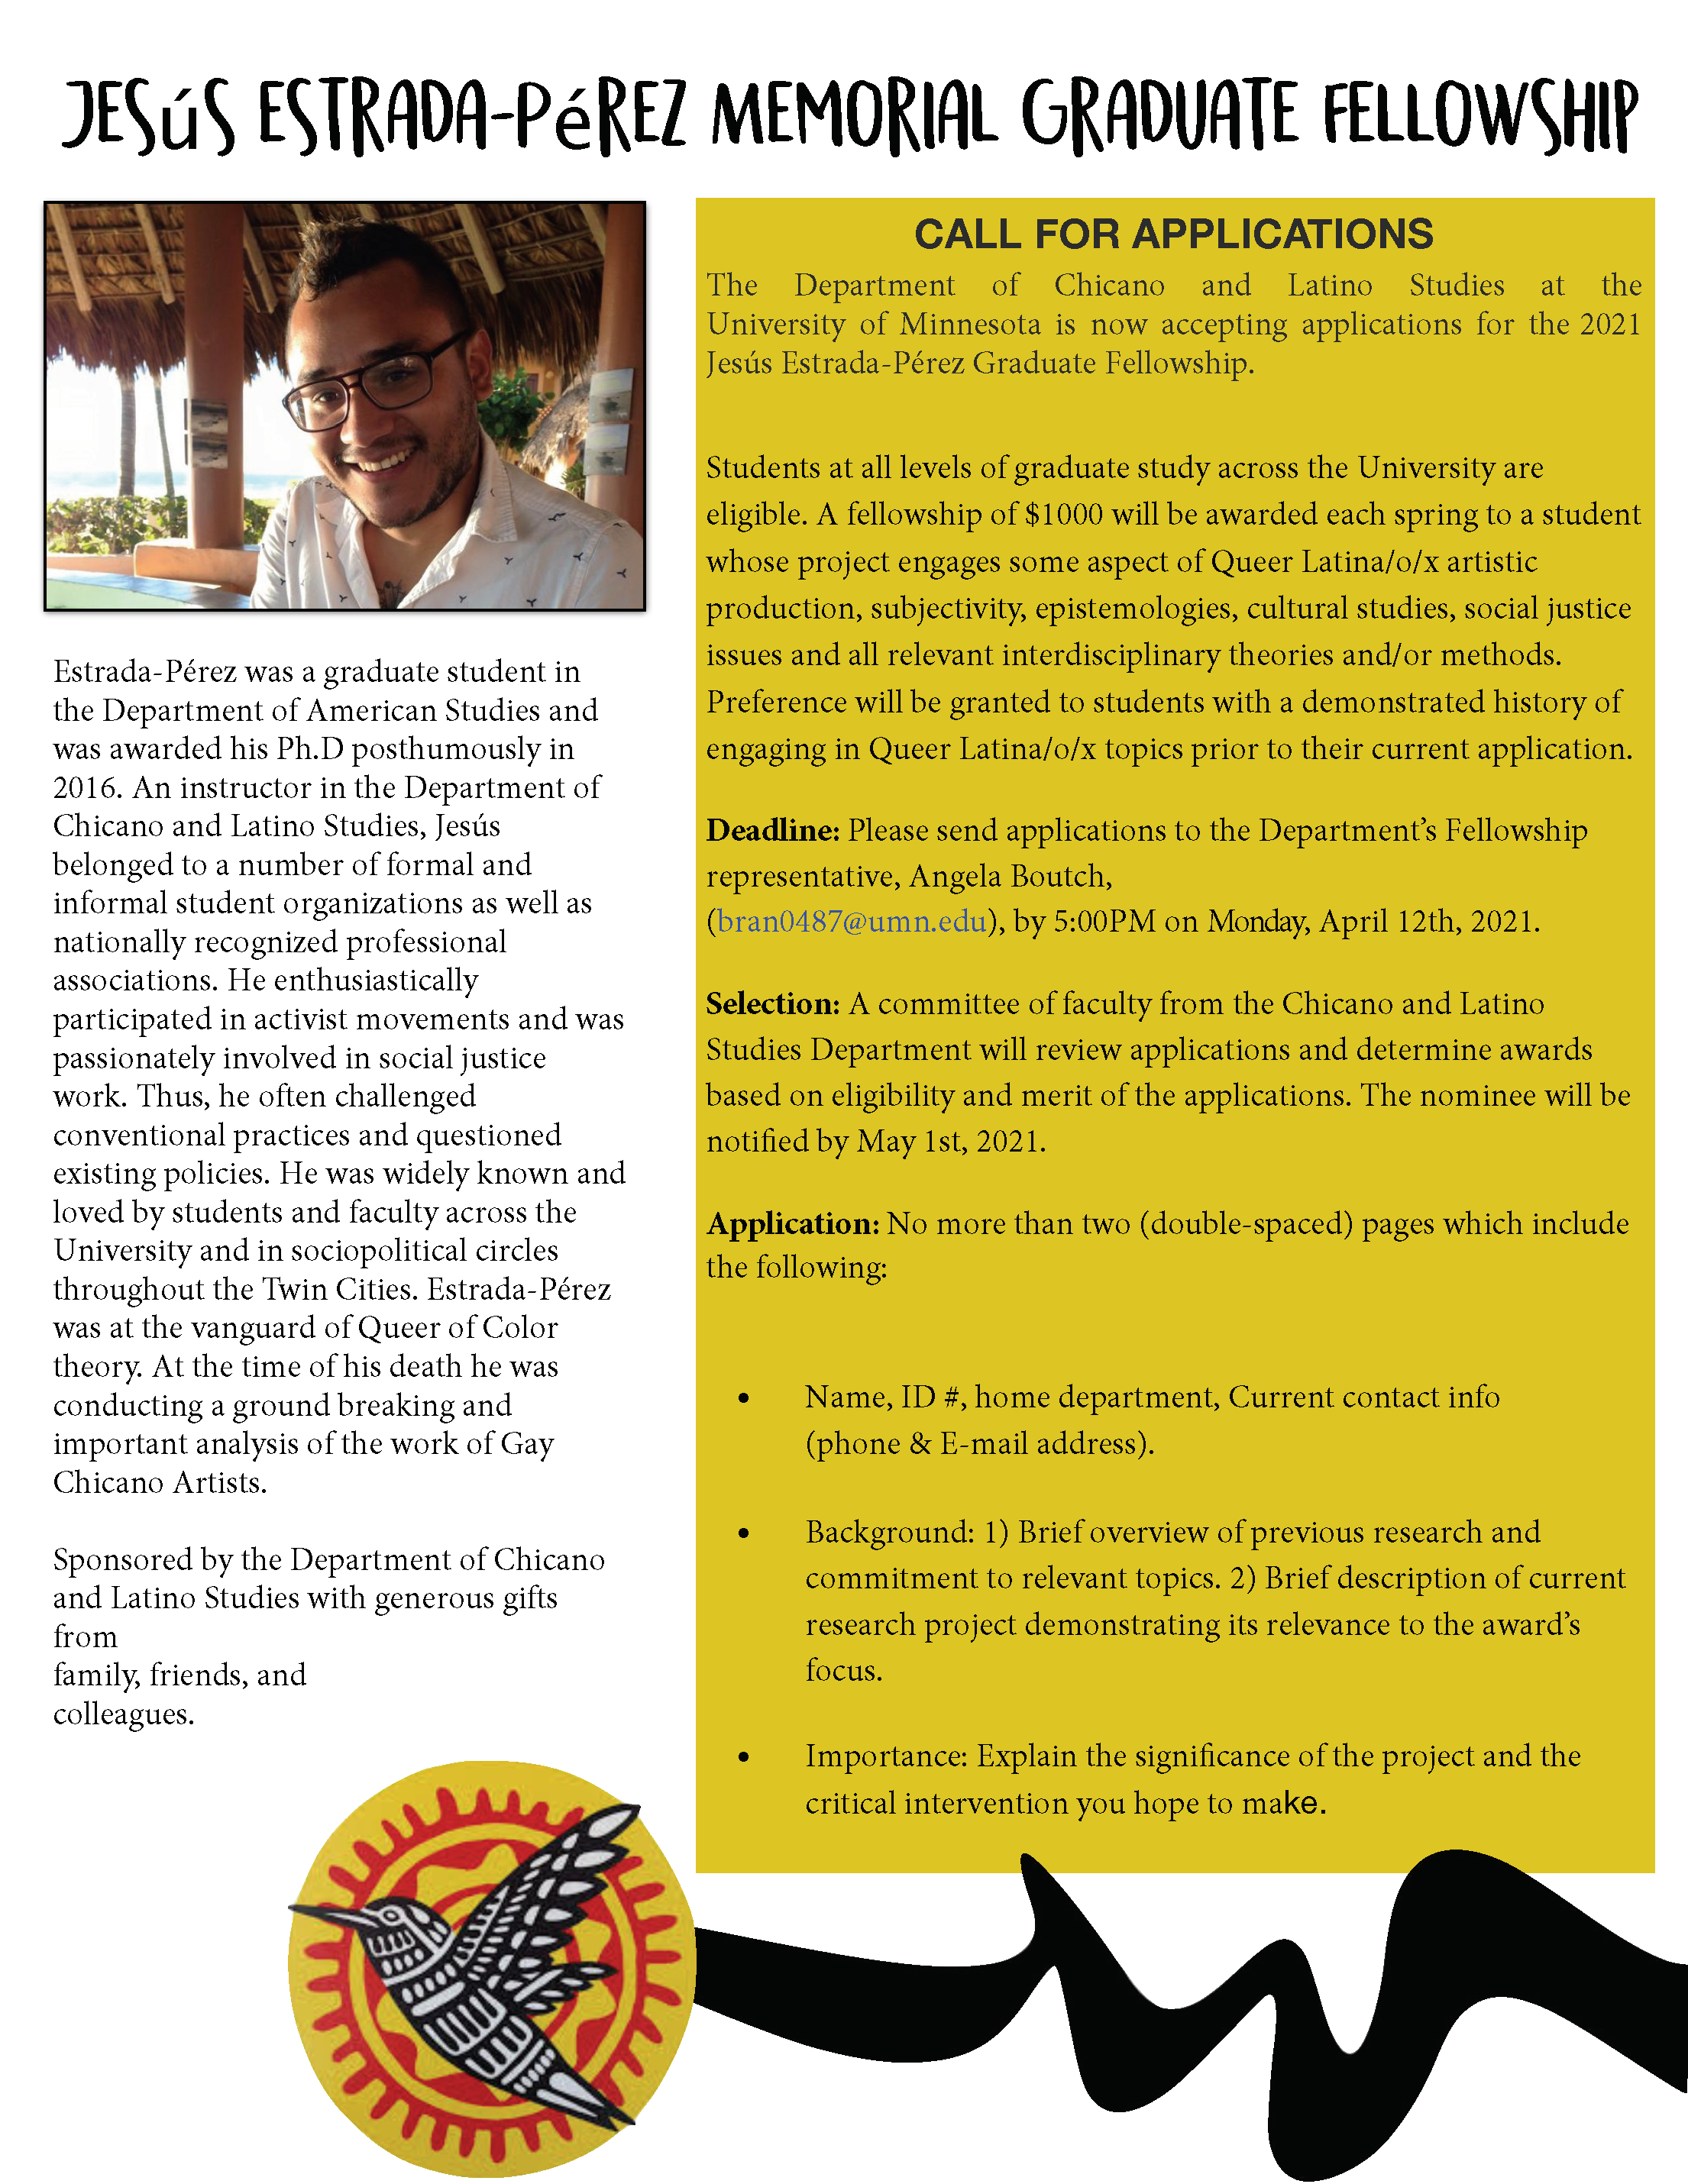 Information regarding the Jesus Estrada-Perez Graduate Fellowship for summer 2021